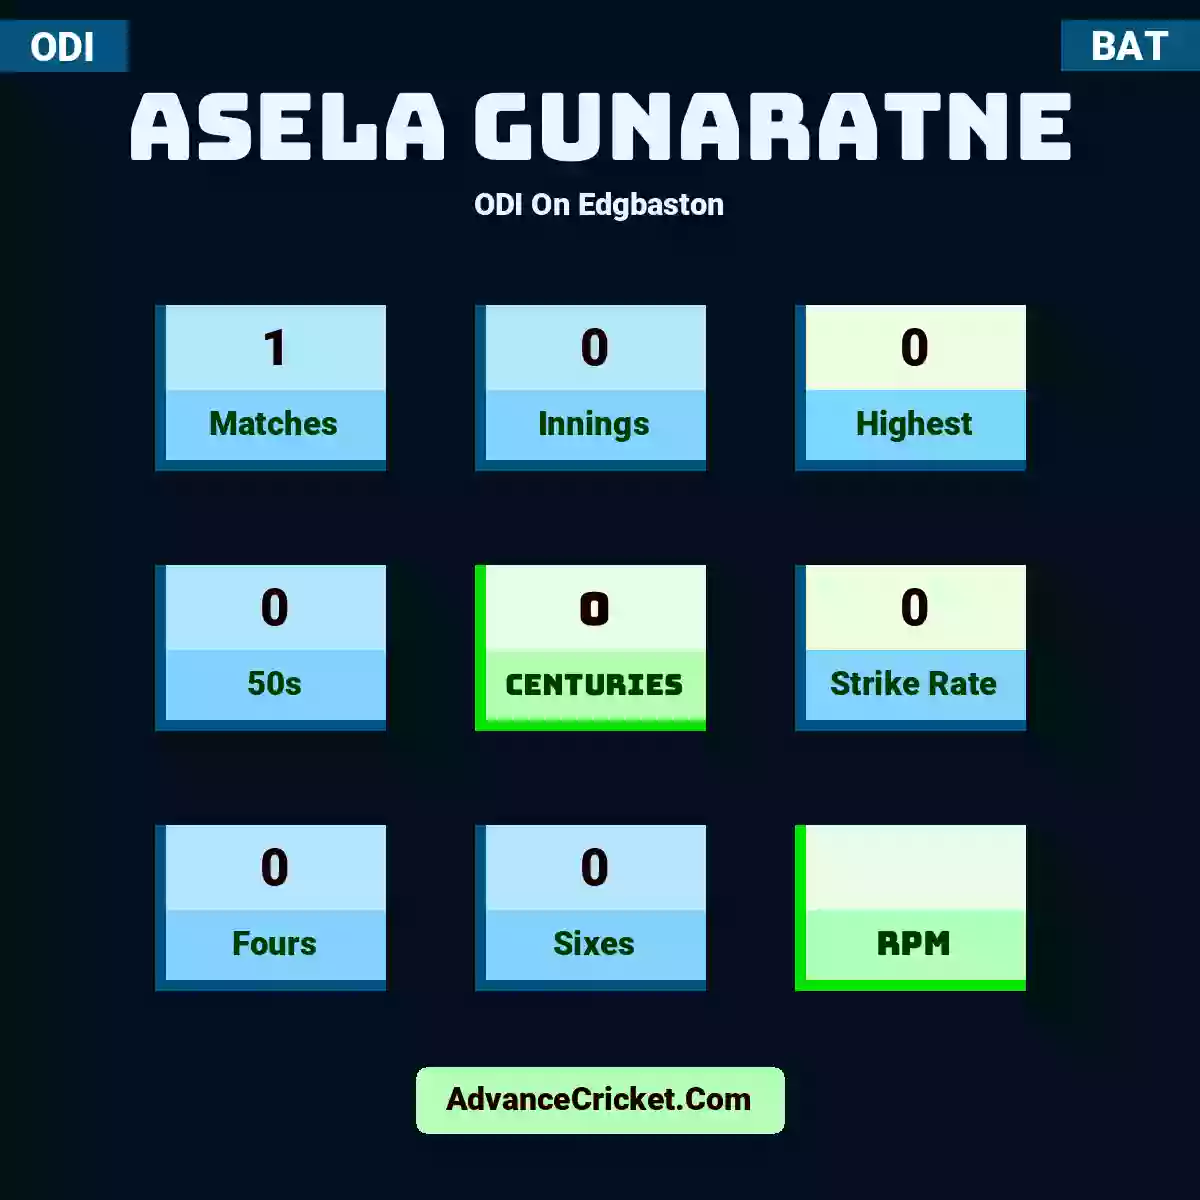 Asela Gunaratne ODI  On Edgbaston, Asela Gunaratne played 1 matches, scored 0 runs as highest, 0 half-centuries, and 0 centuries, with a strike rate of 0. A.Gunaratne hit 0 fours and 0 sixes.